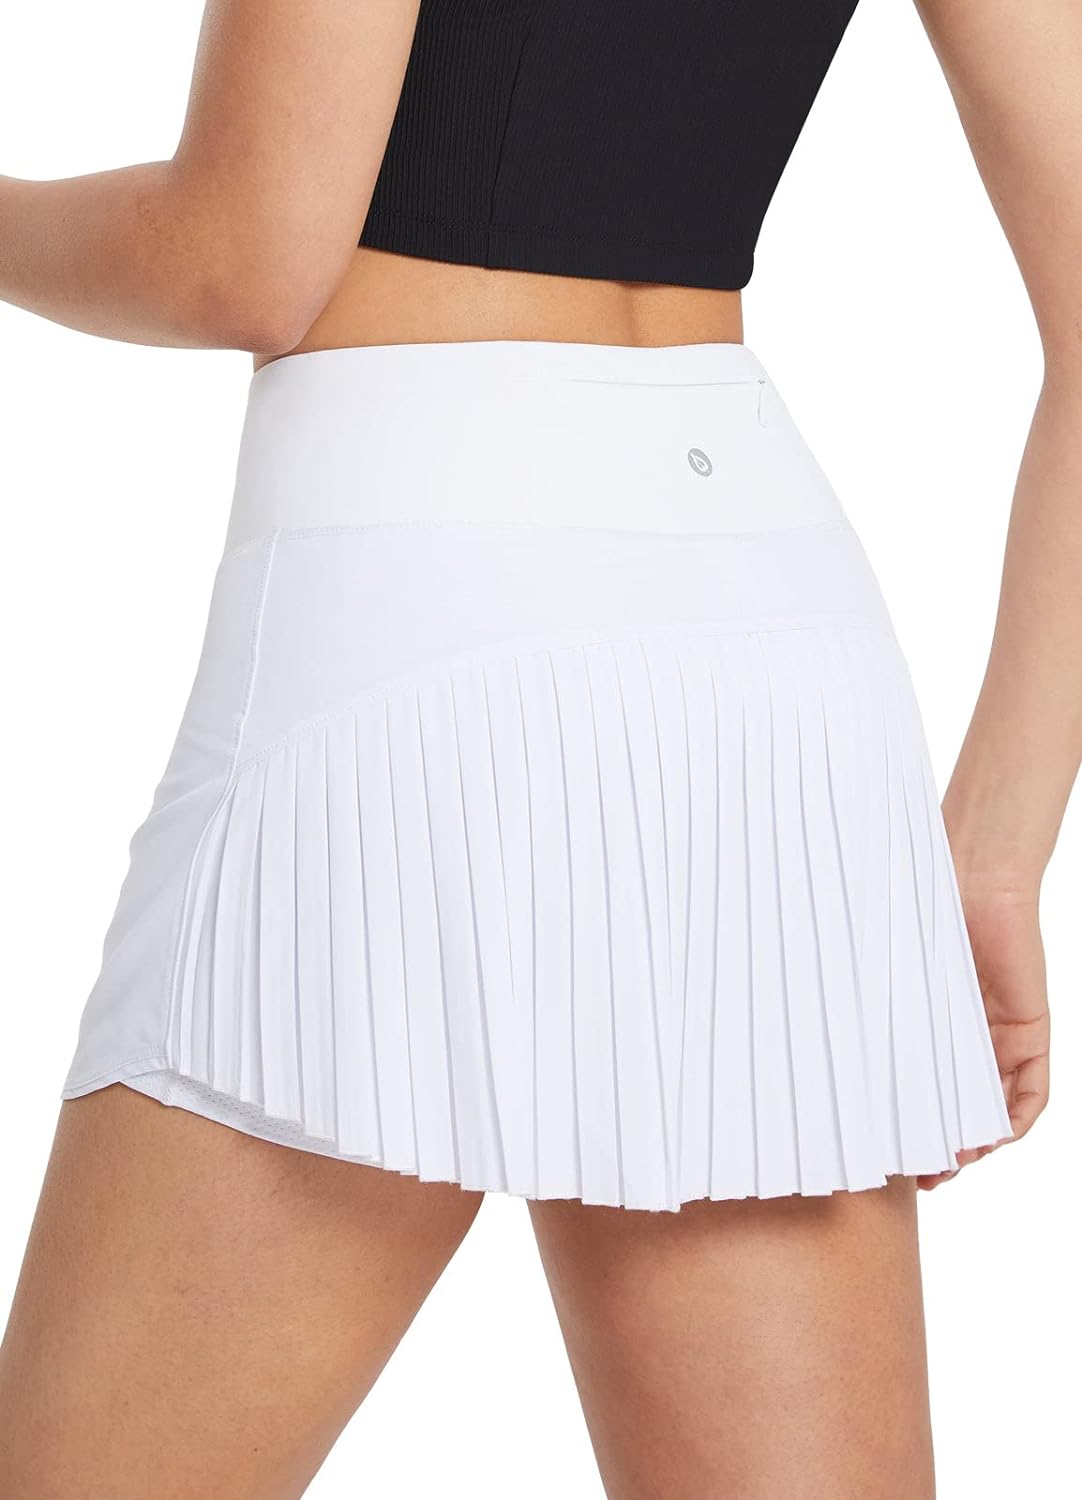 BALEAF Women' Pleated Tennis Skirts High Waisted Lightweight Athletic Golf Skorts Skirts with Shorts Pockets